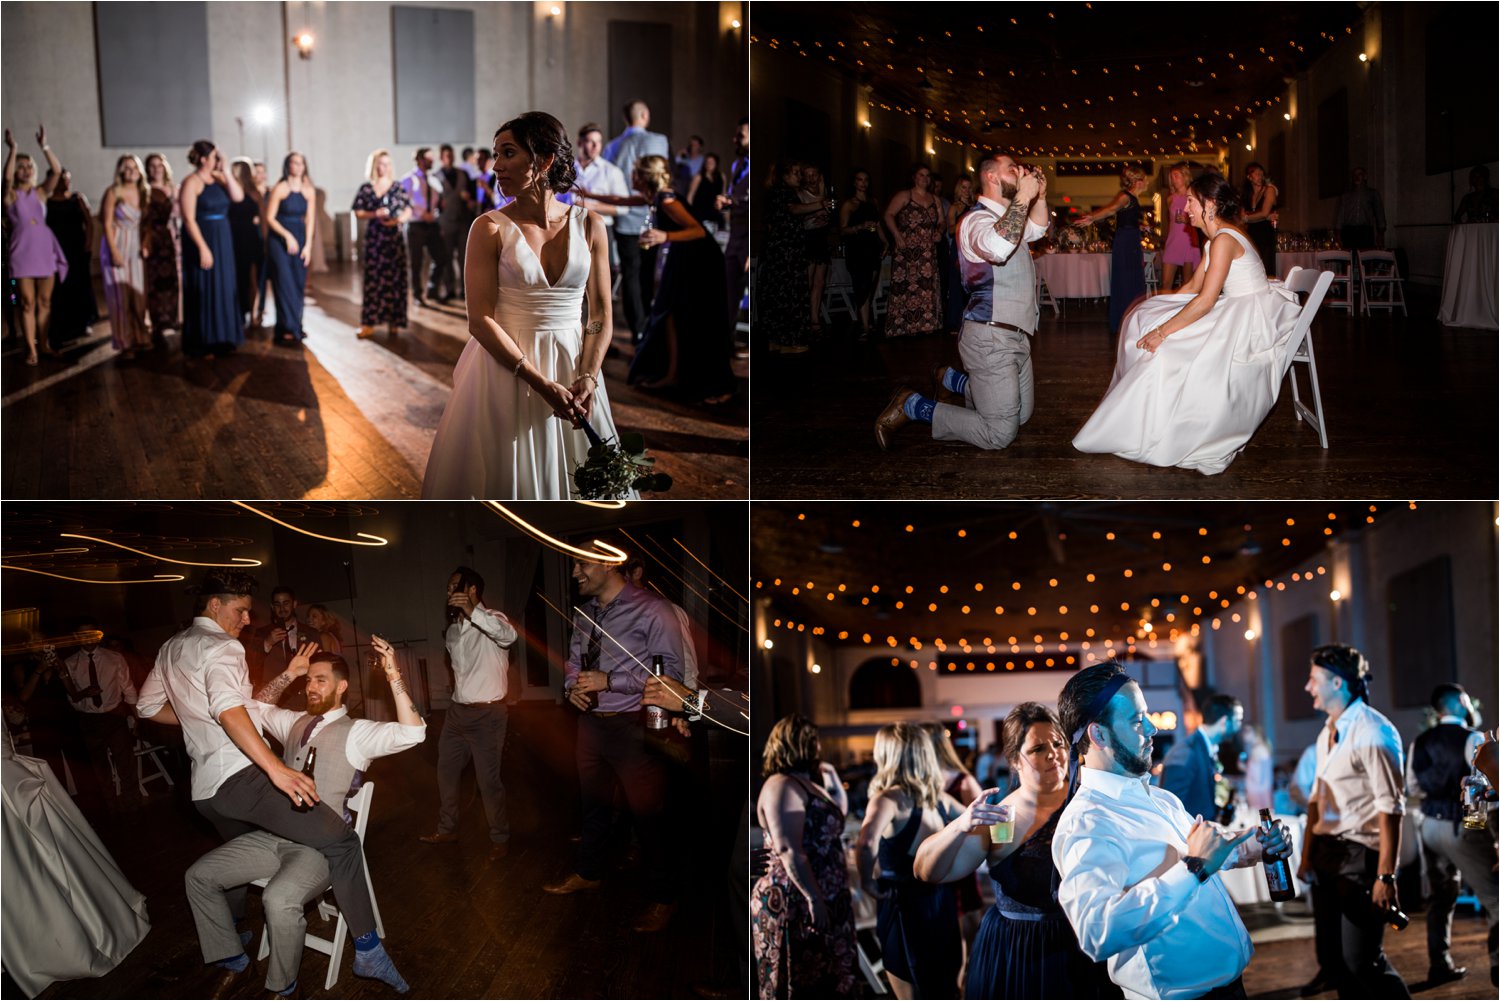  images by feliciathephotographer.com | destination wedding photographer | kansas city | spring time | reception | dance floor | party | dj alex reed | bouquet toss | garter | groomsmen | 